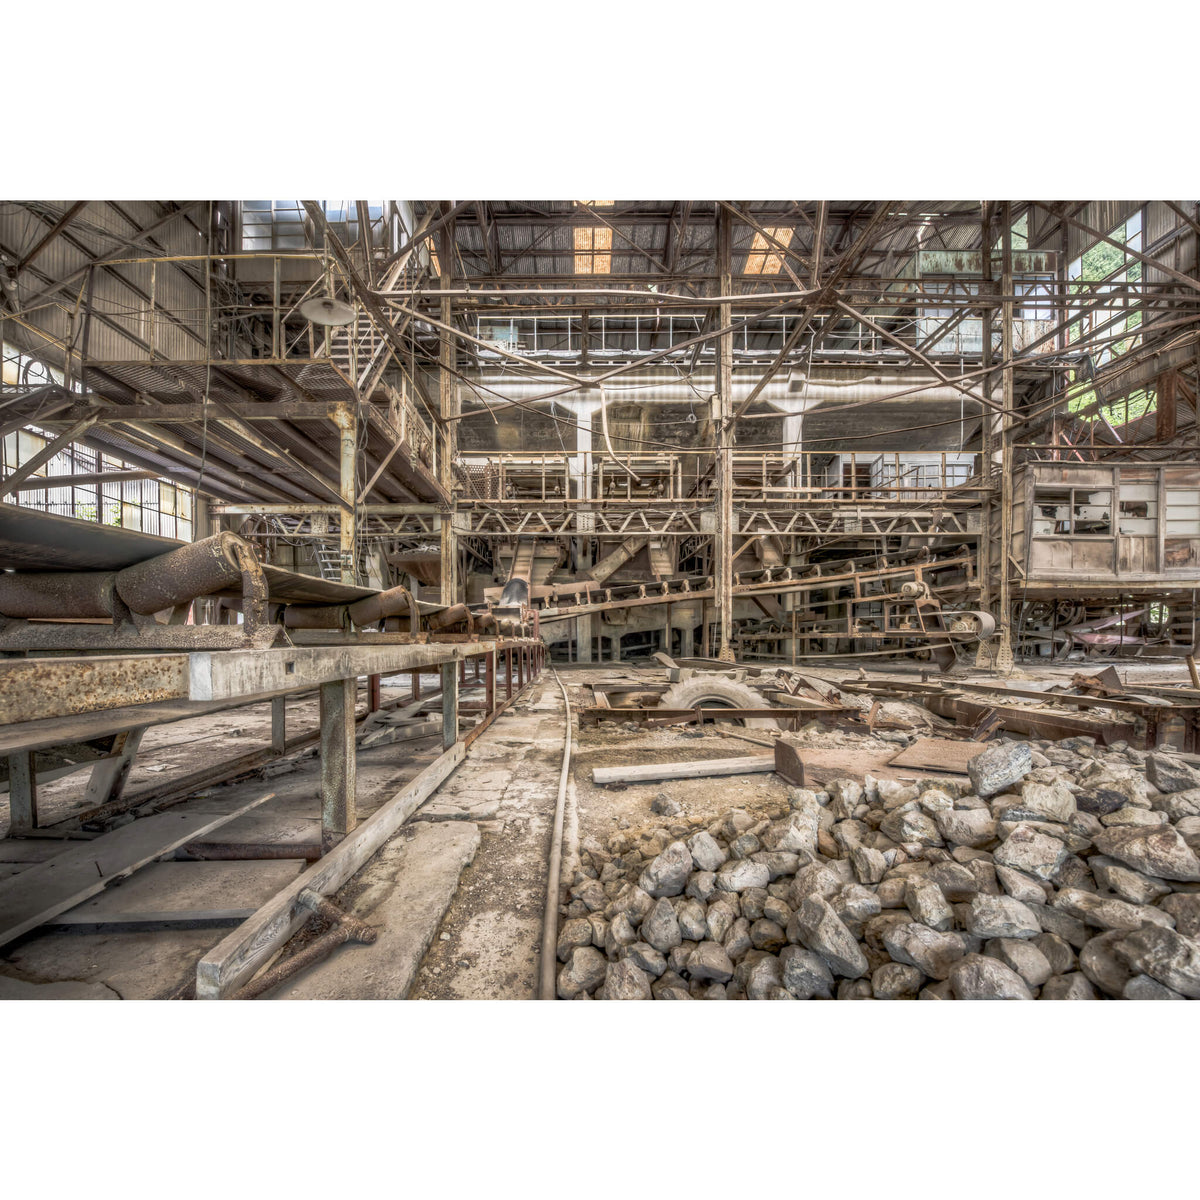 Raw Material Conveyors | Ashio Copper Mine Fine Art Print - Lost Collective Shop